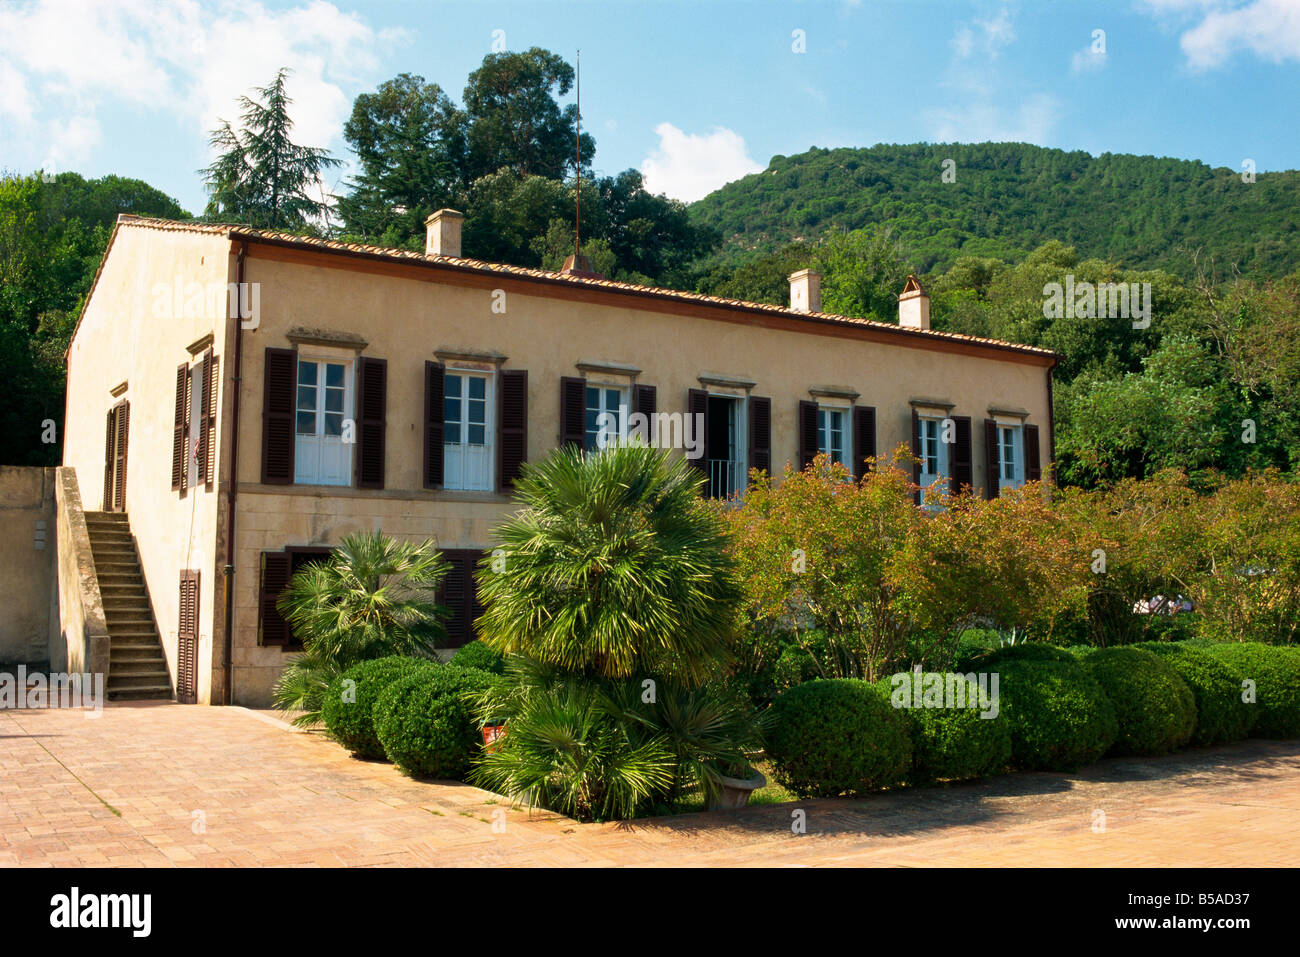 The Villa San Martino Napoleon s summer residence 4 miles from ...